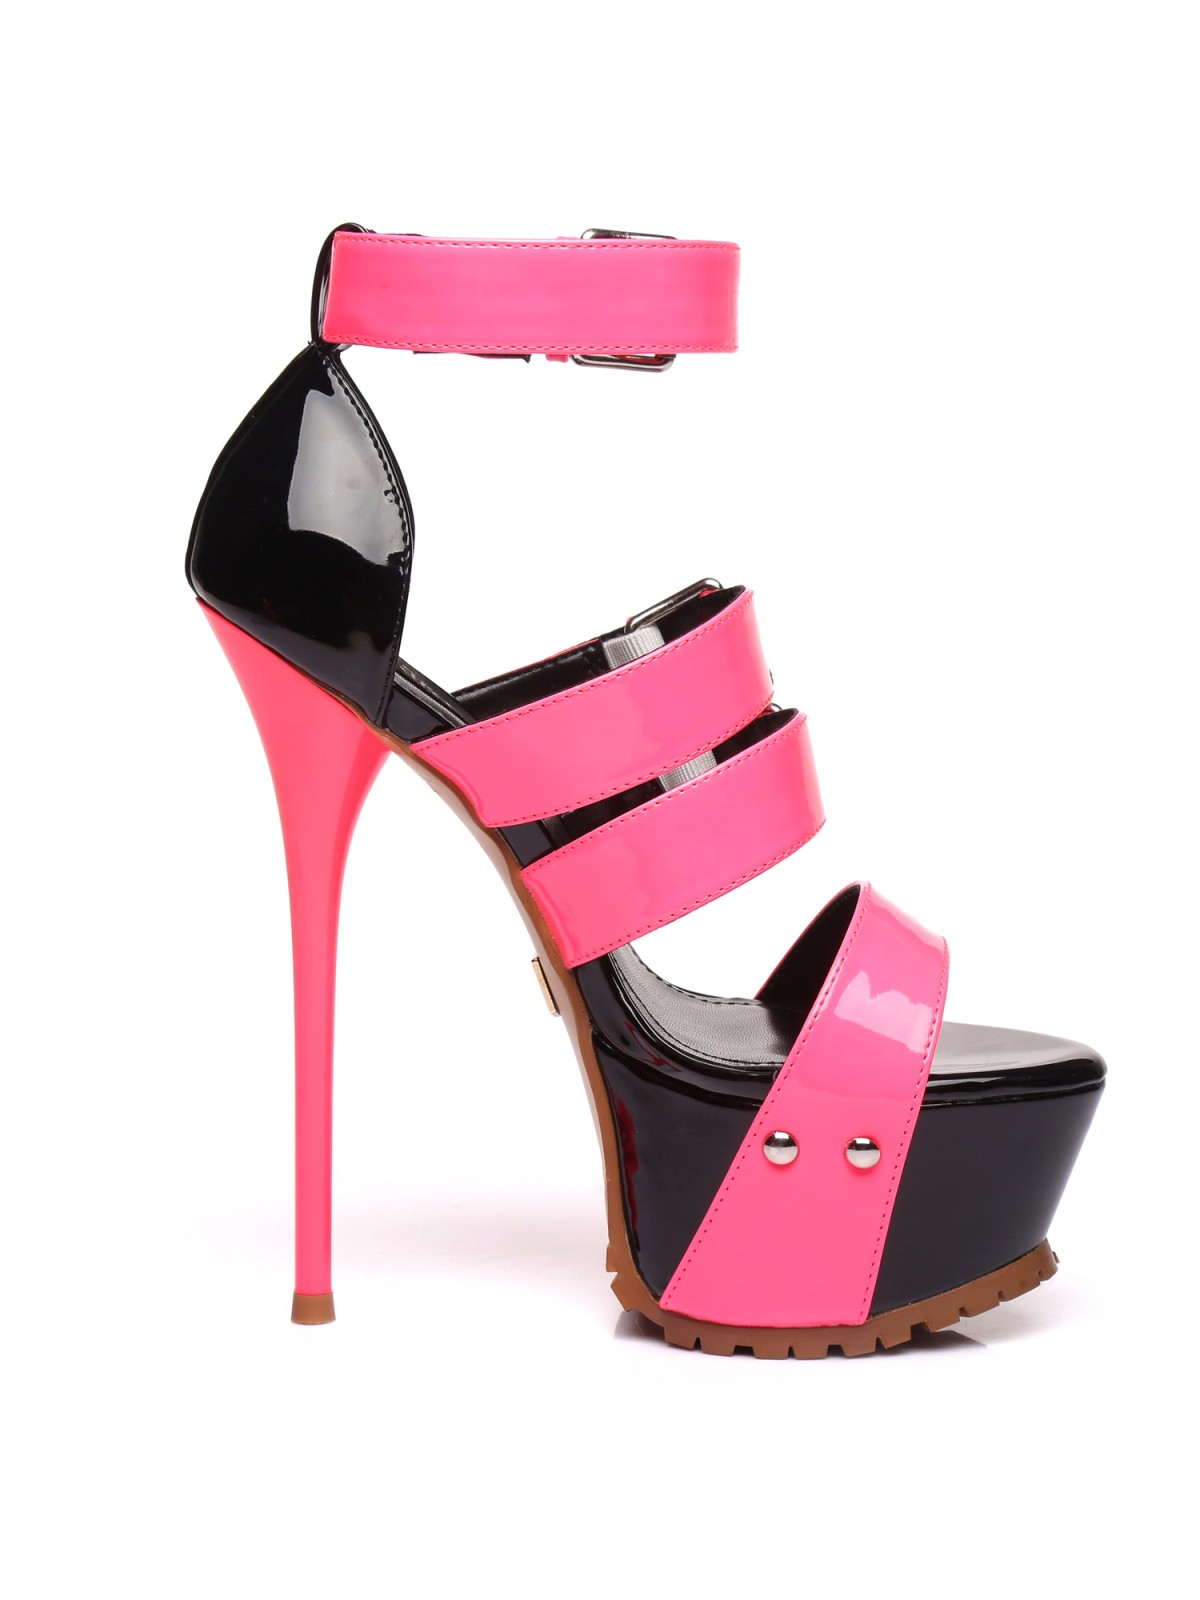 Giaro SIENNA black shiny straps sandals pink platform with